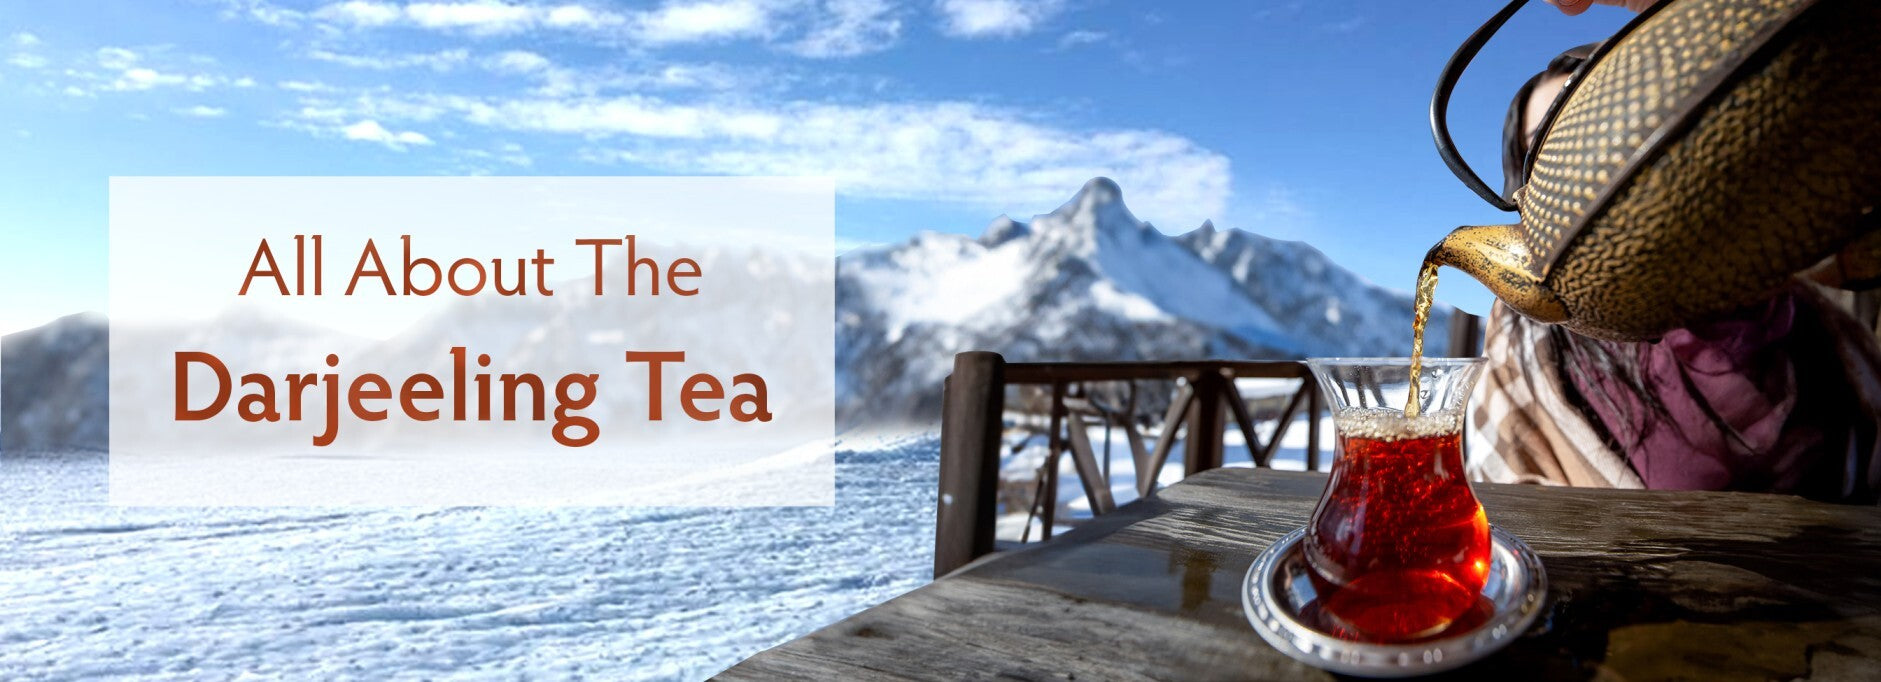 All About The Darjeeling Tea